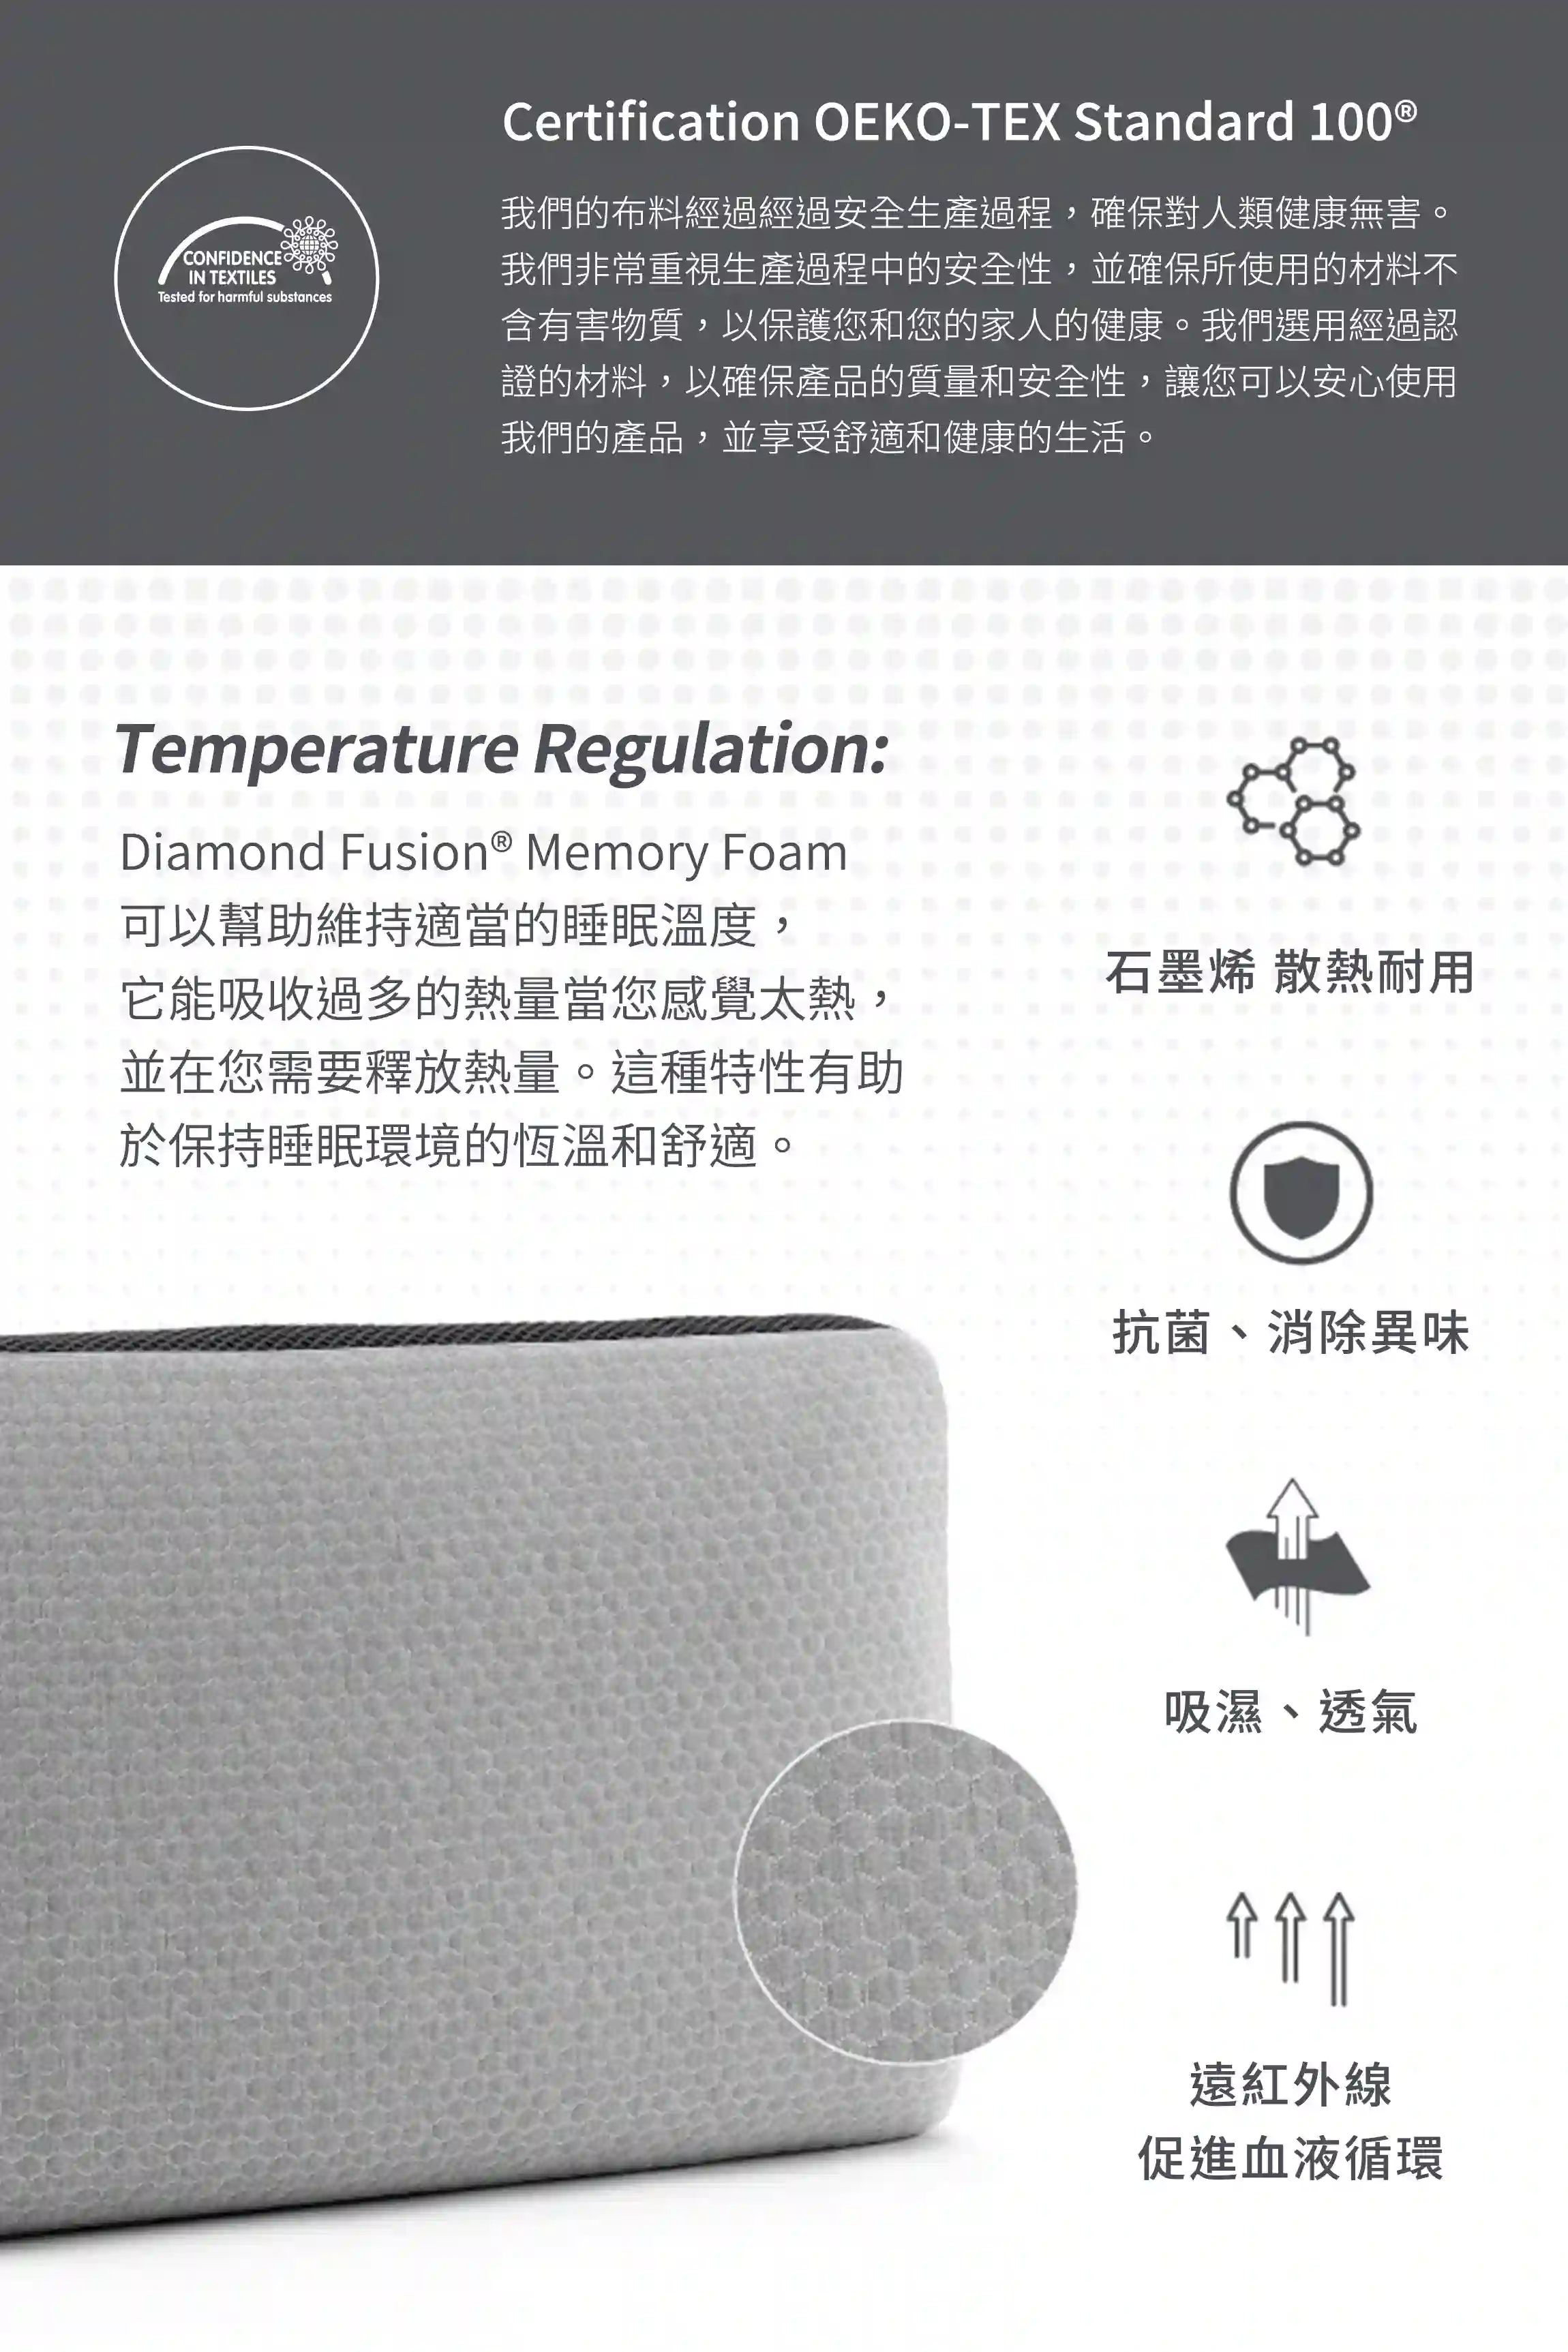 Cosmo石墨烯涼感記憶枕通過OEKO-TEX安全檢測，對人類健康無害，且擁有恆溫功能，讓您有更舒適的睡眠